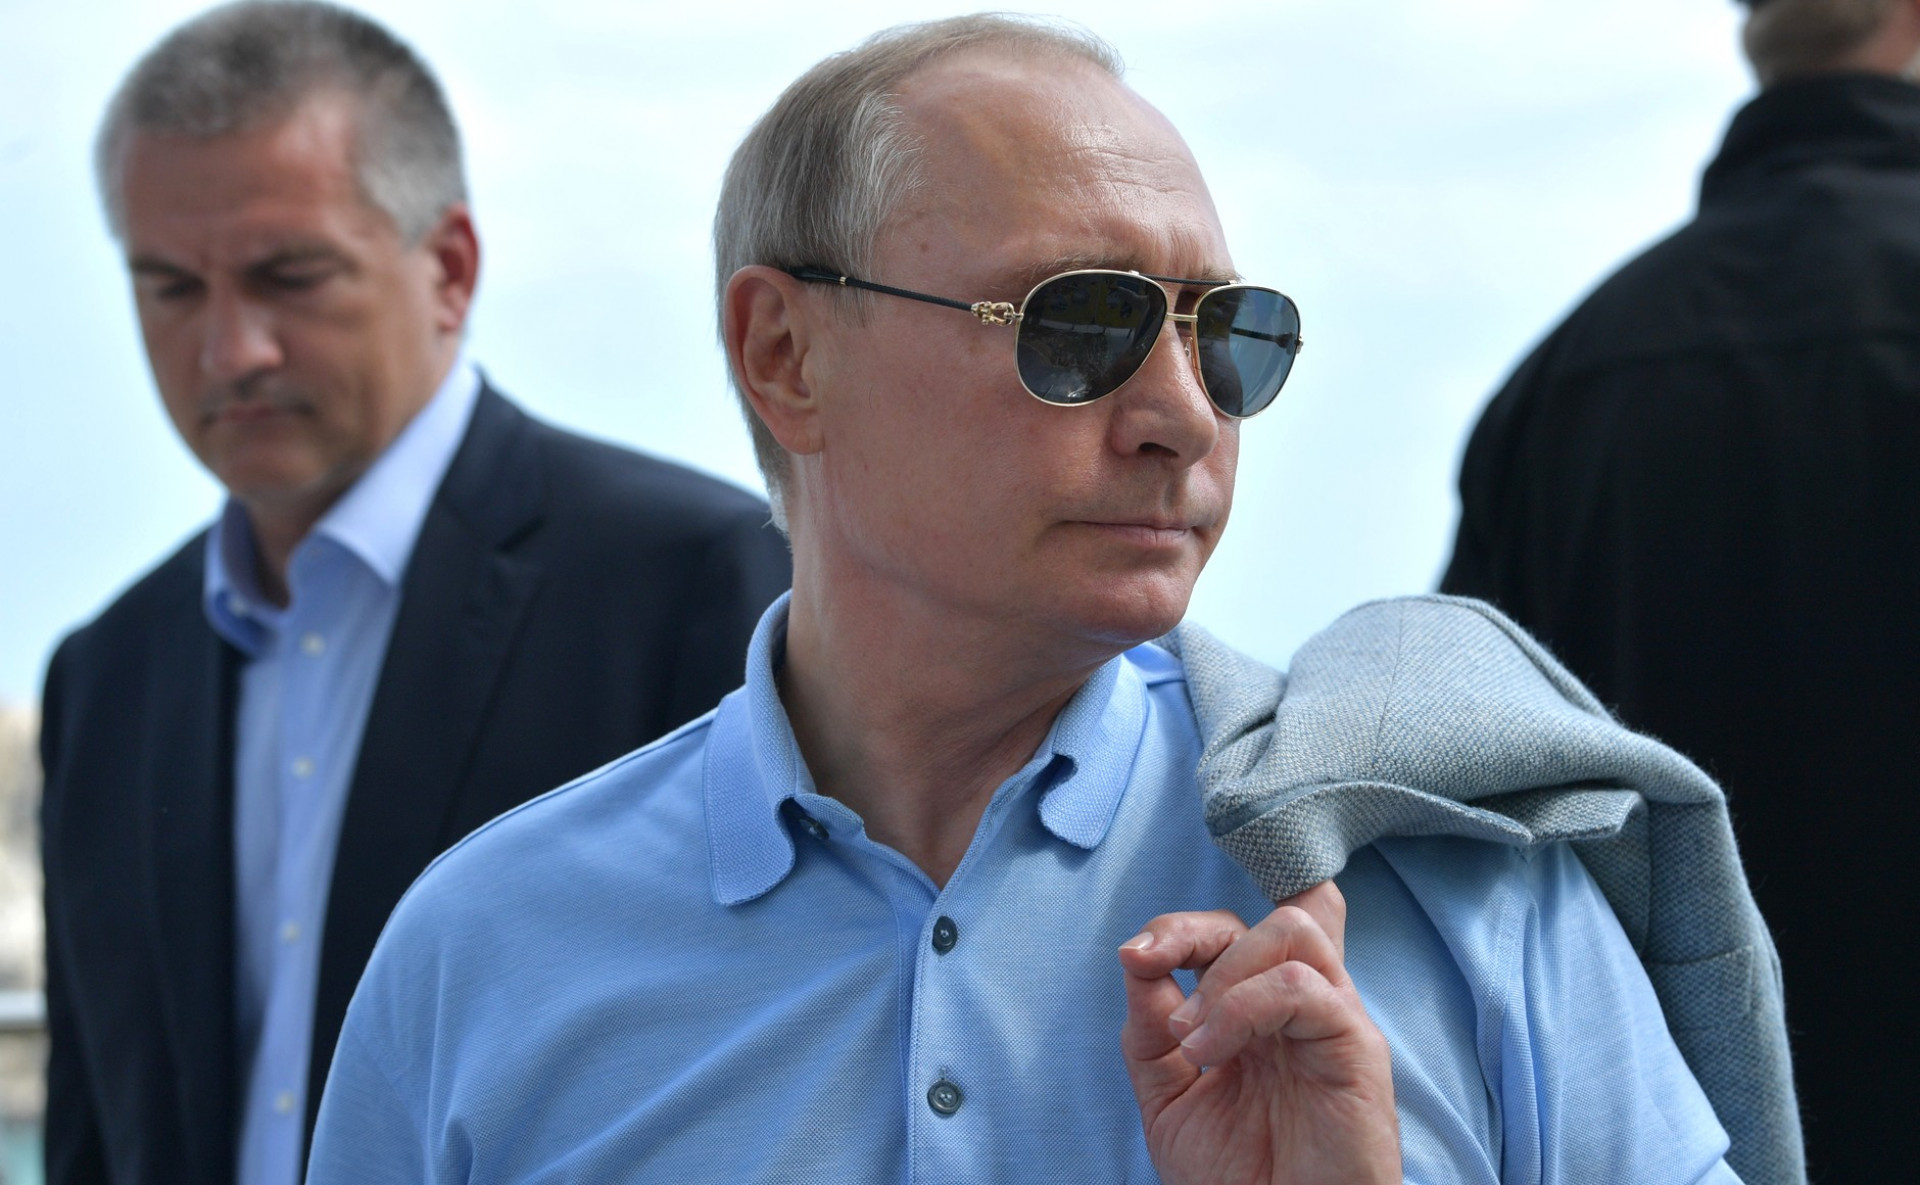 President Putin's Sartorial Style